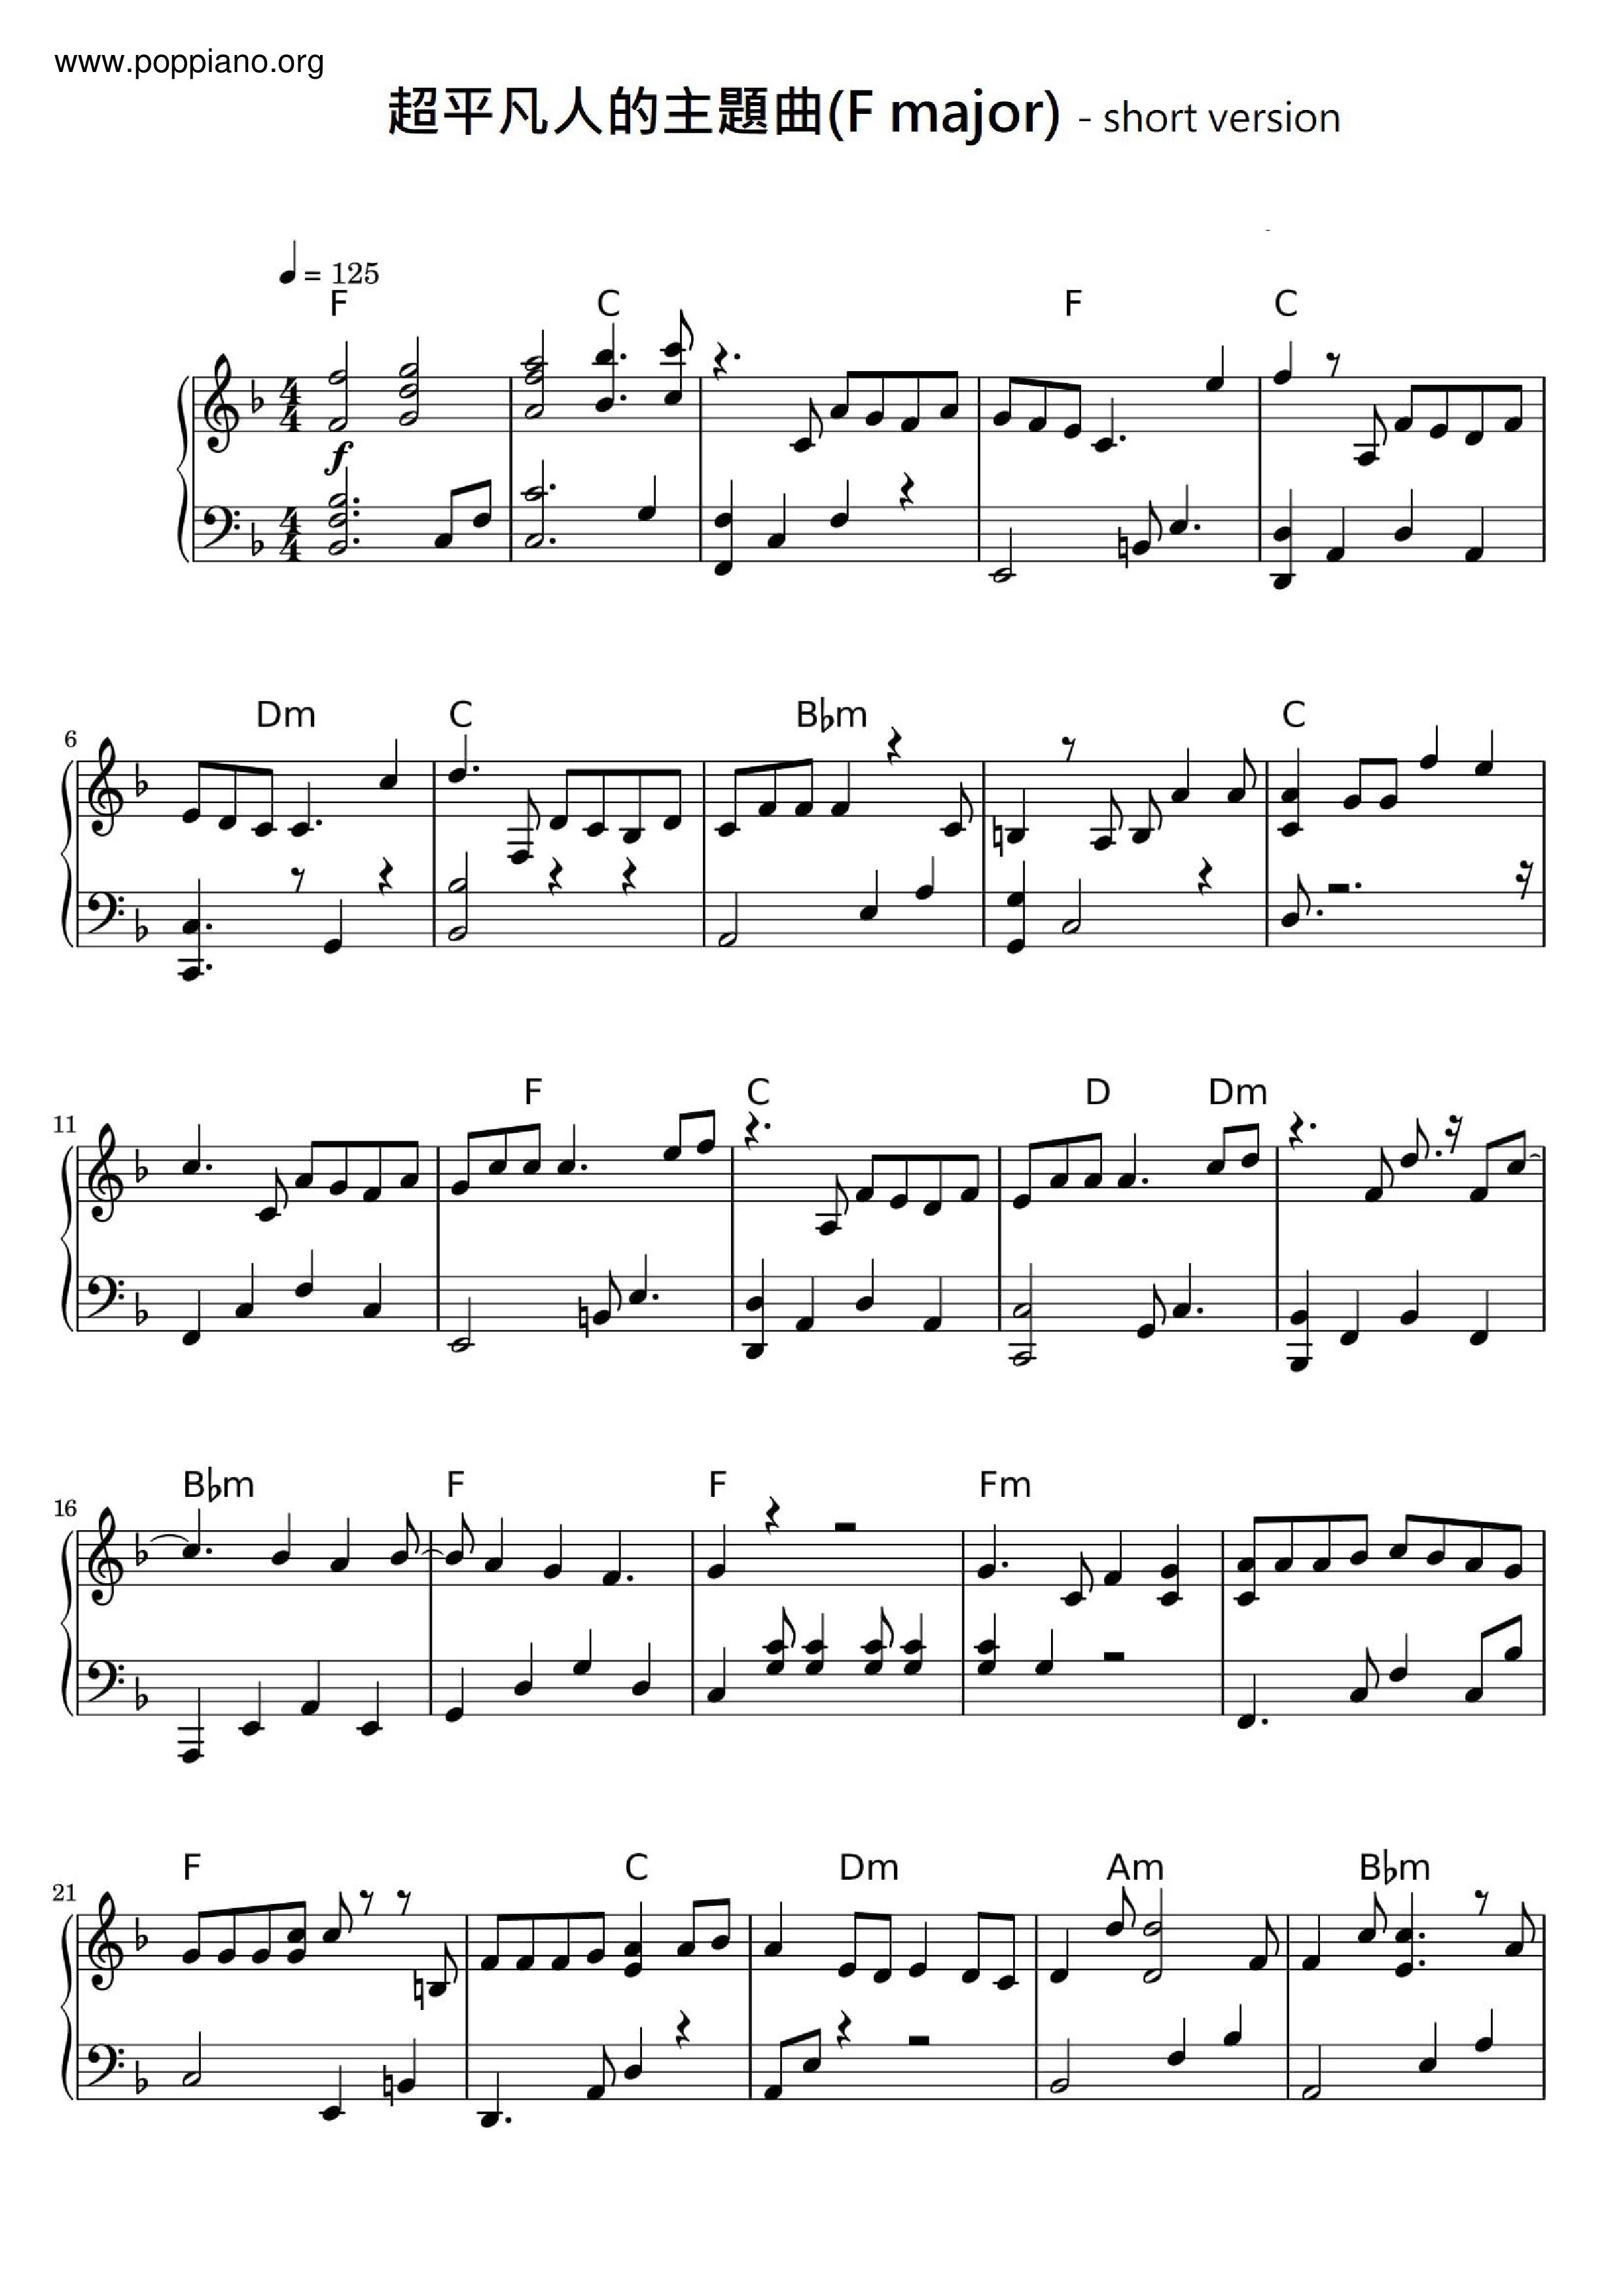 超平凡人的主題曲all Versions Sheet Music Piano Score Free Pdf Download Hk Pop Piano Academy